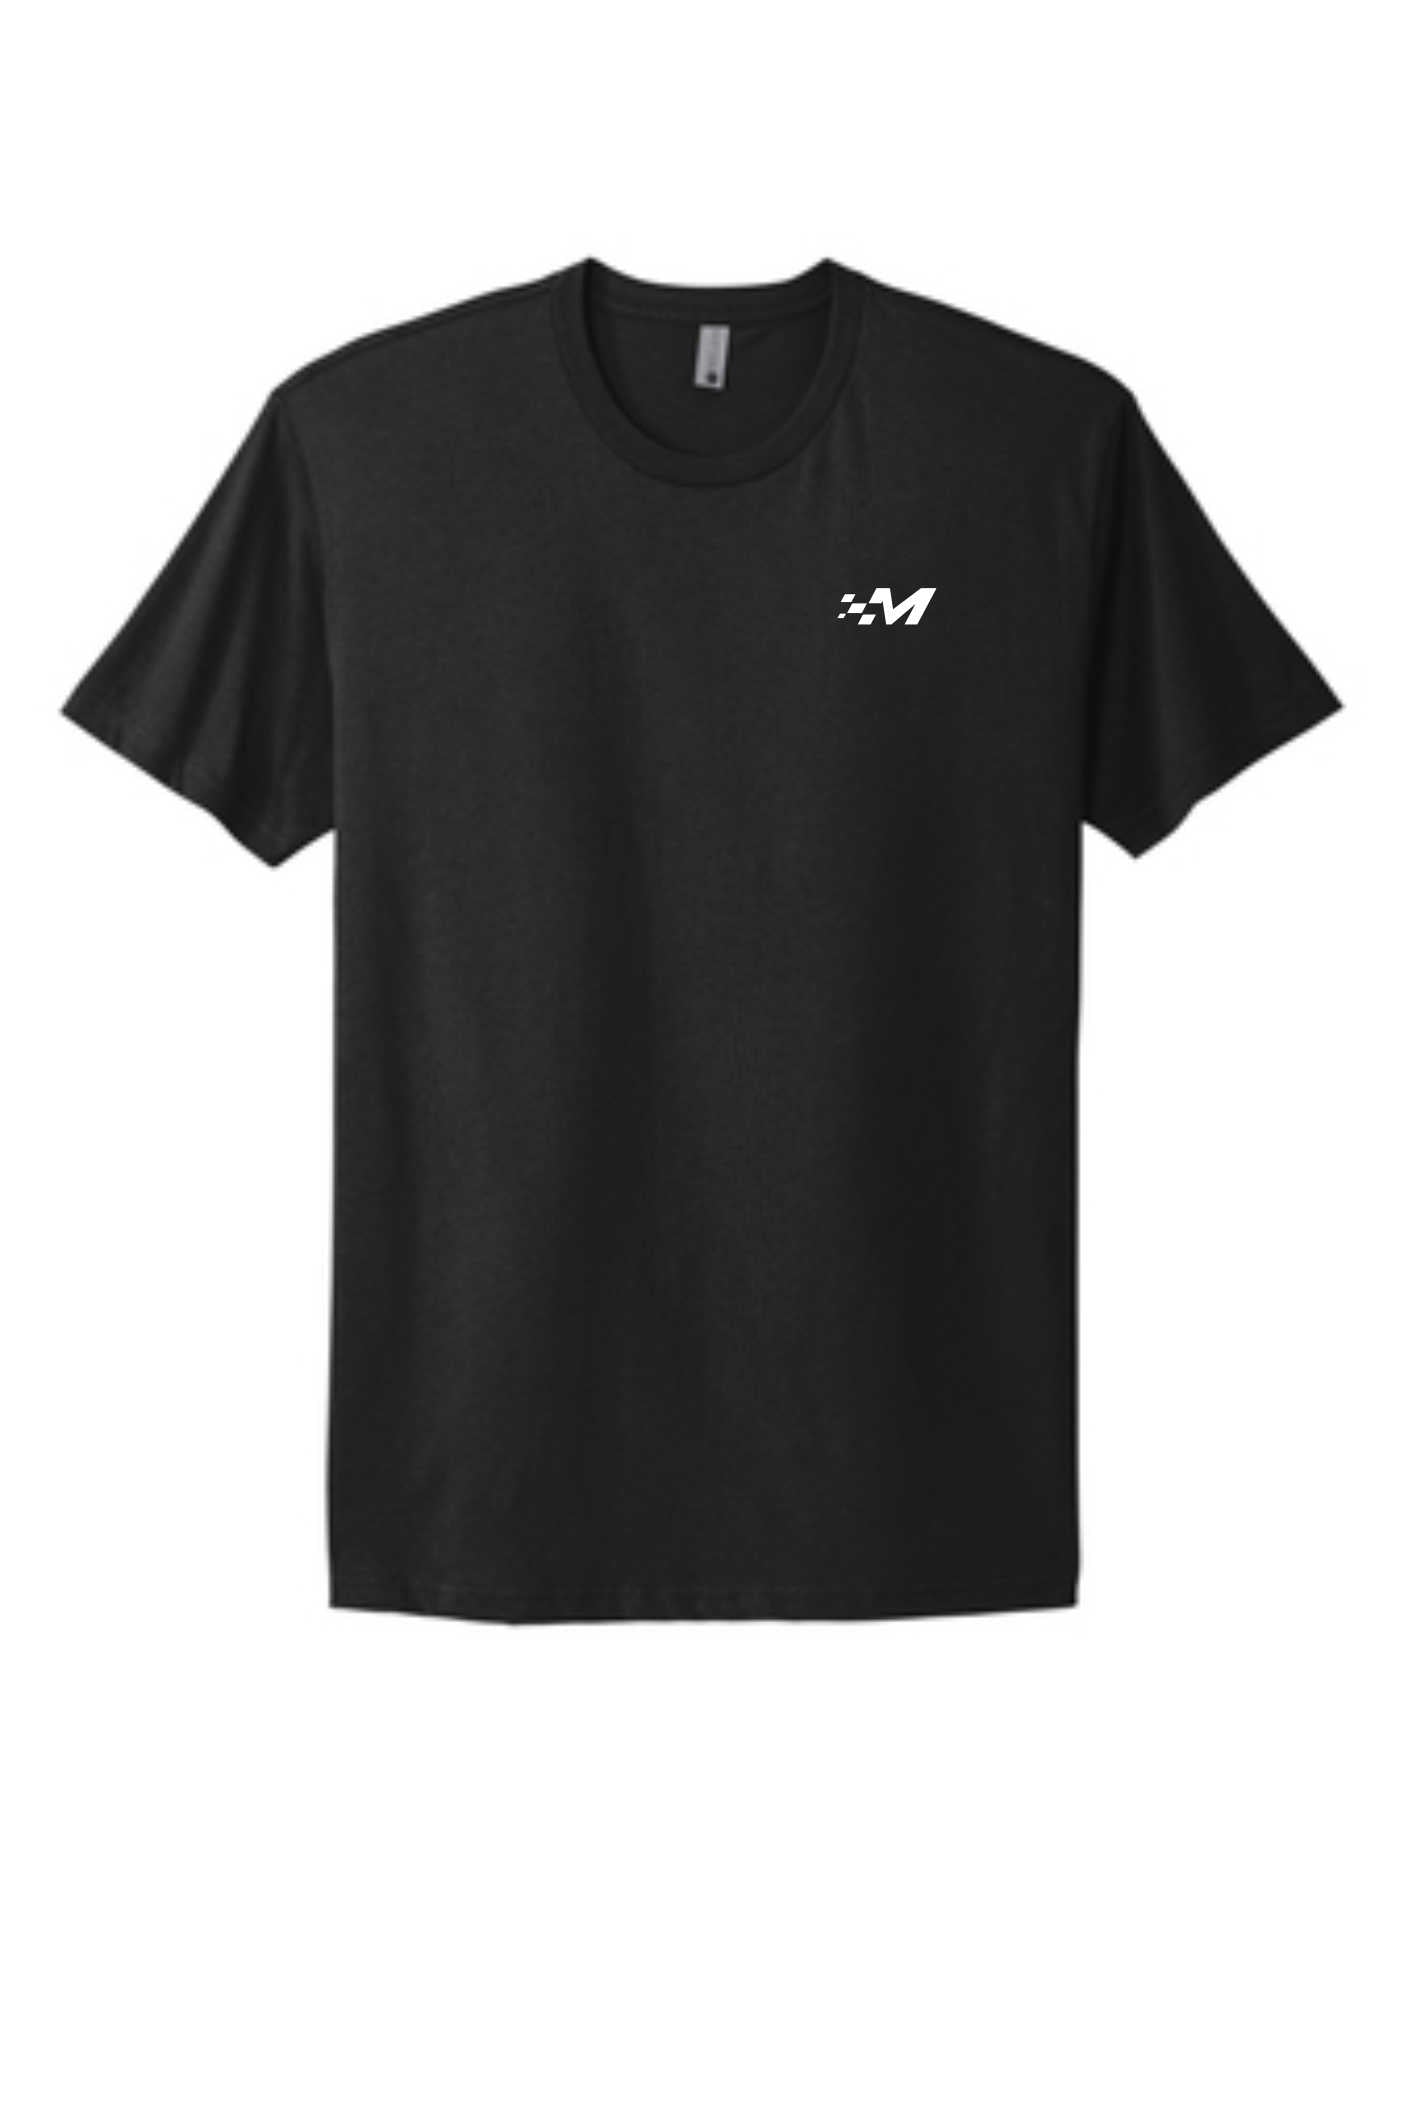 E46 M3 "Generations" 2023 Design - Short Sleeve T-Shirt - Black